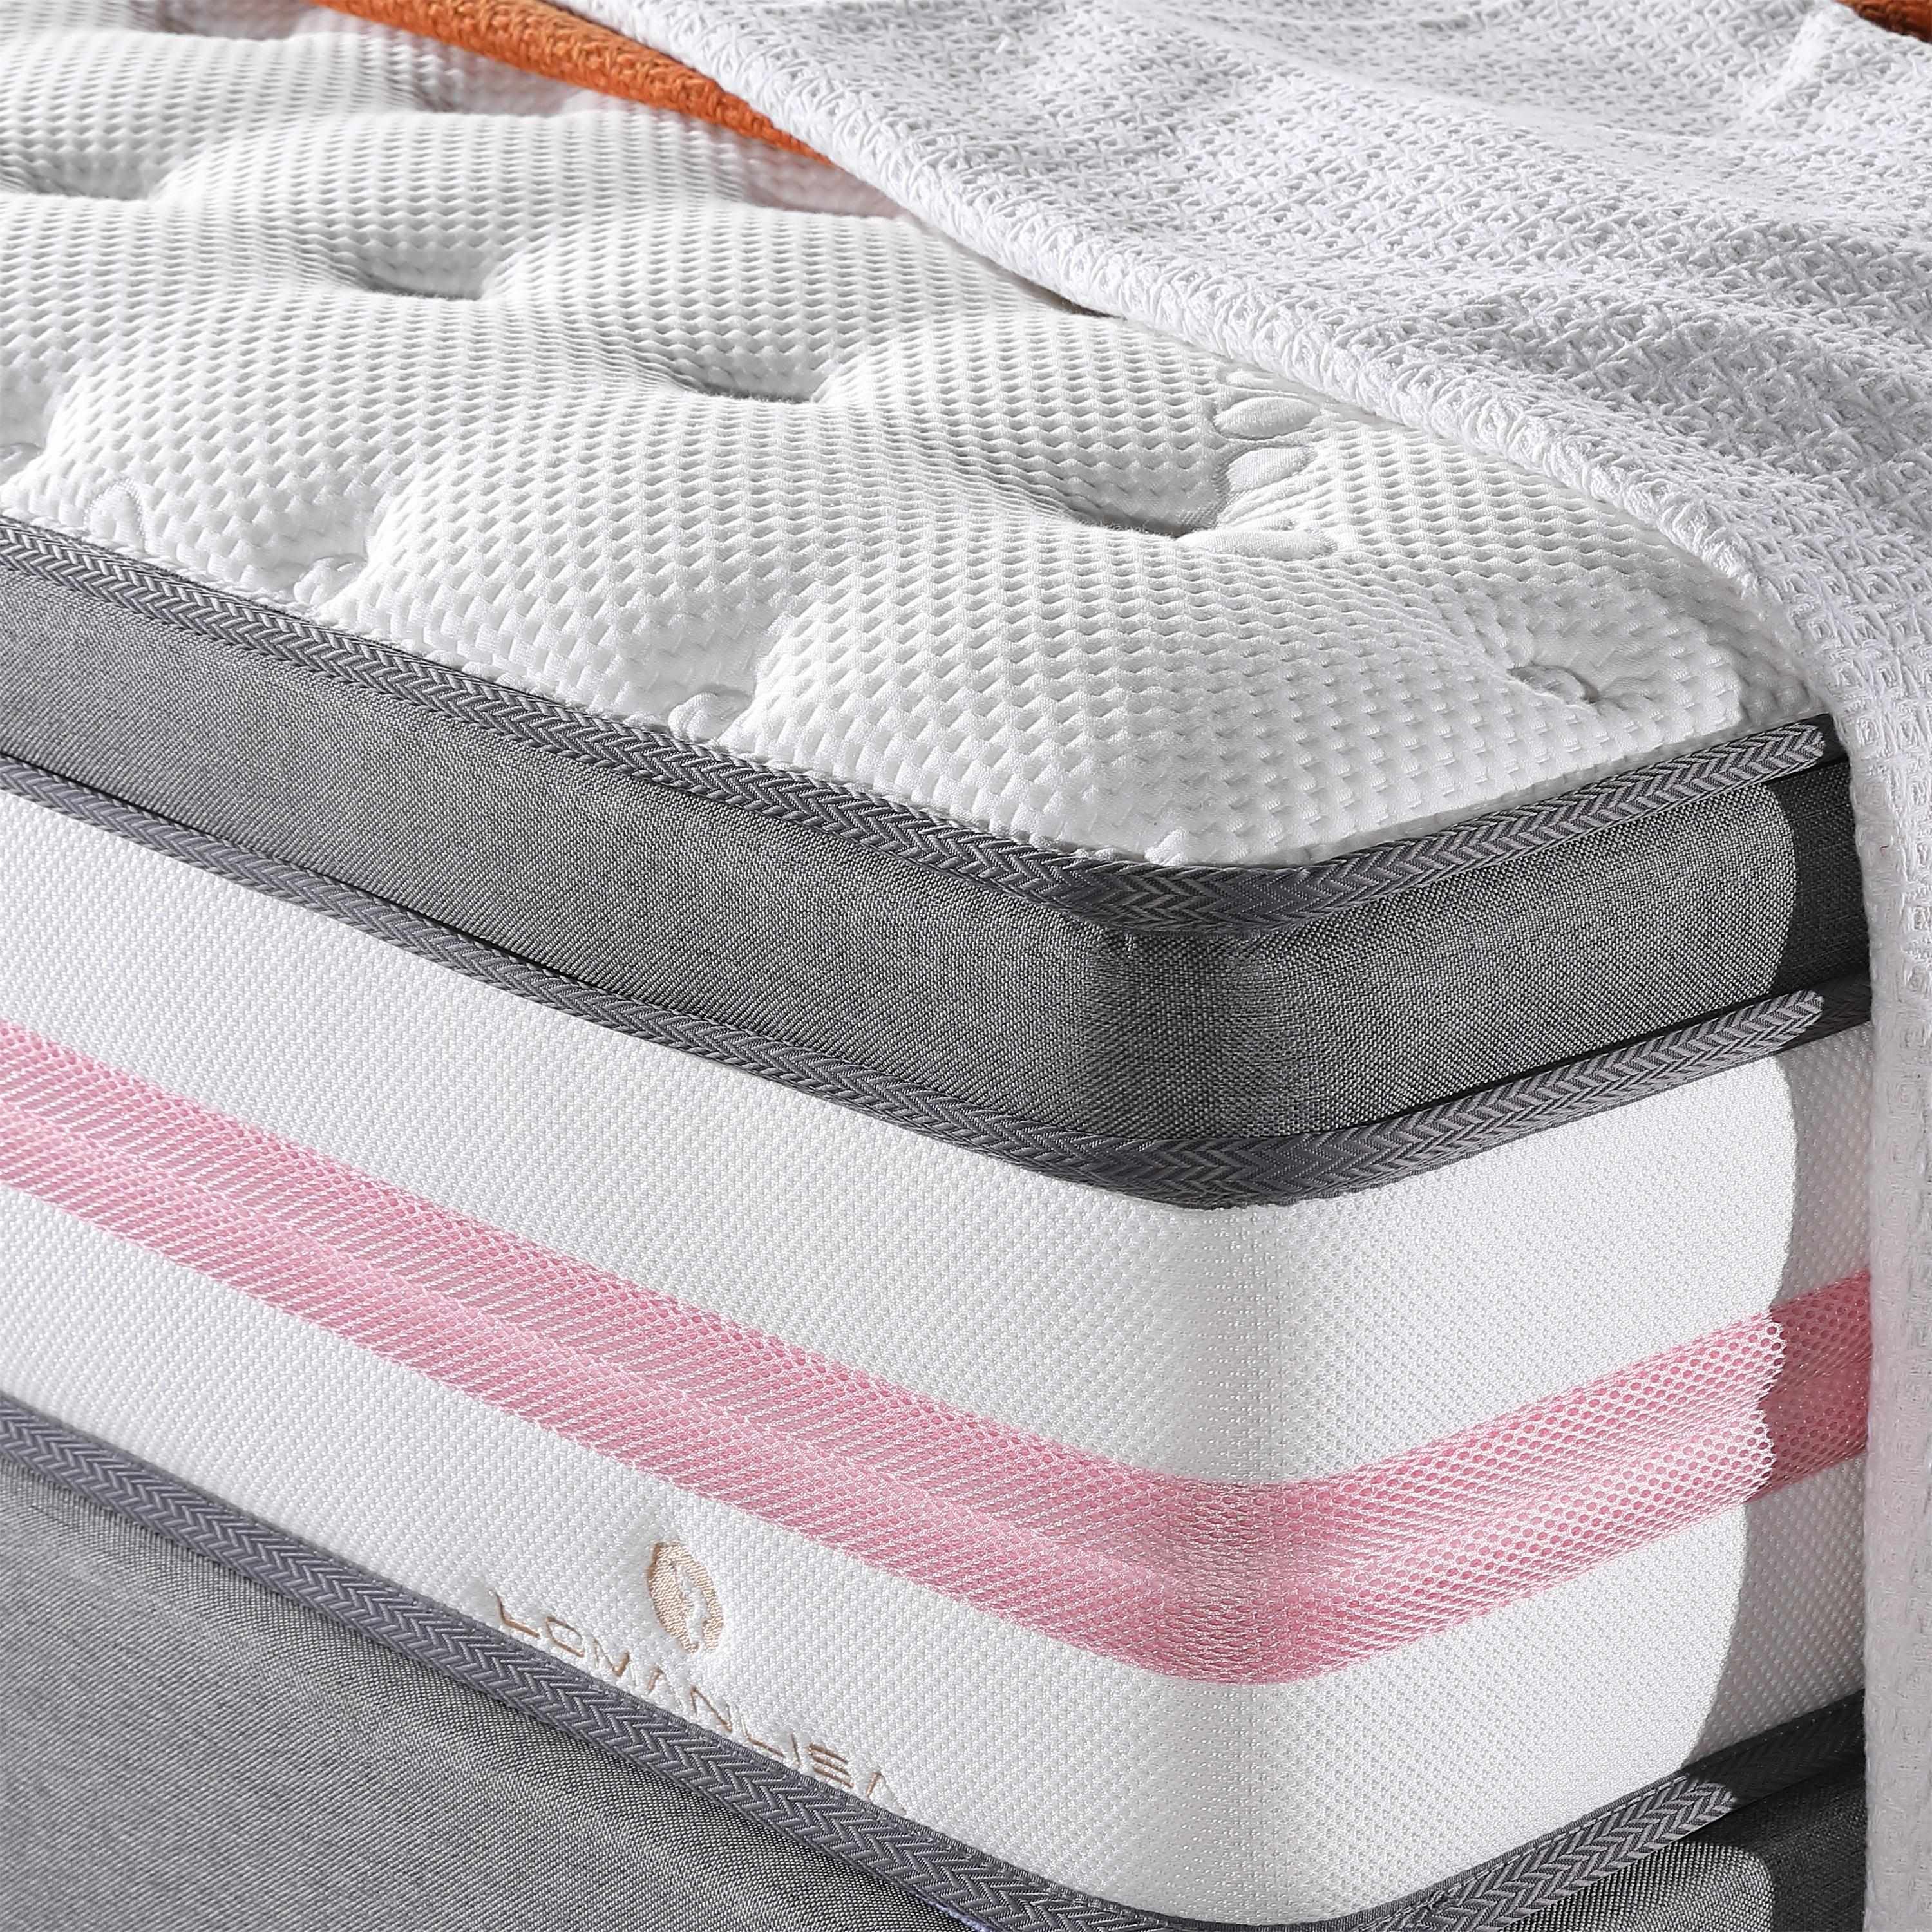 JLH-roll up mattress ,king size mattress in a box | JLH-1